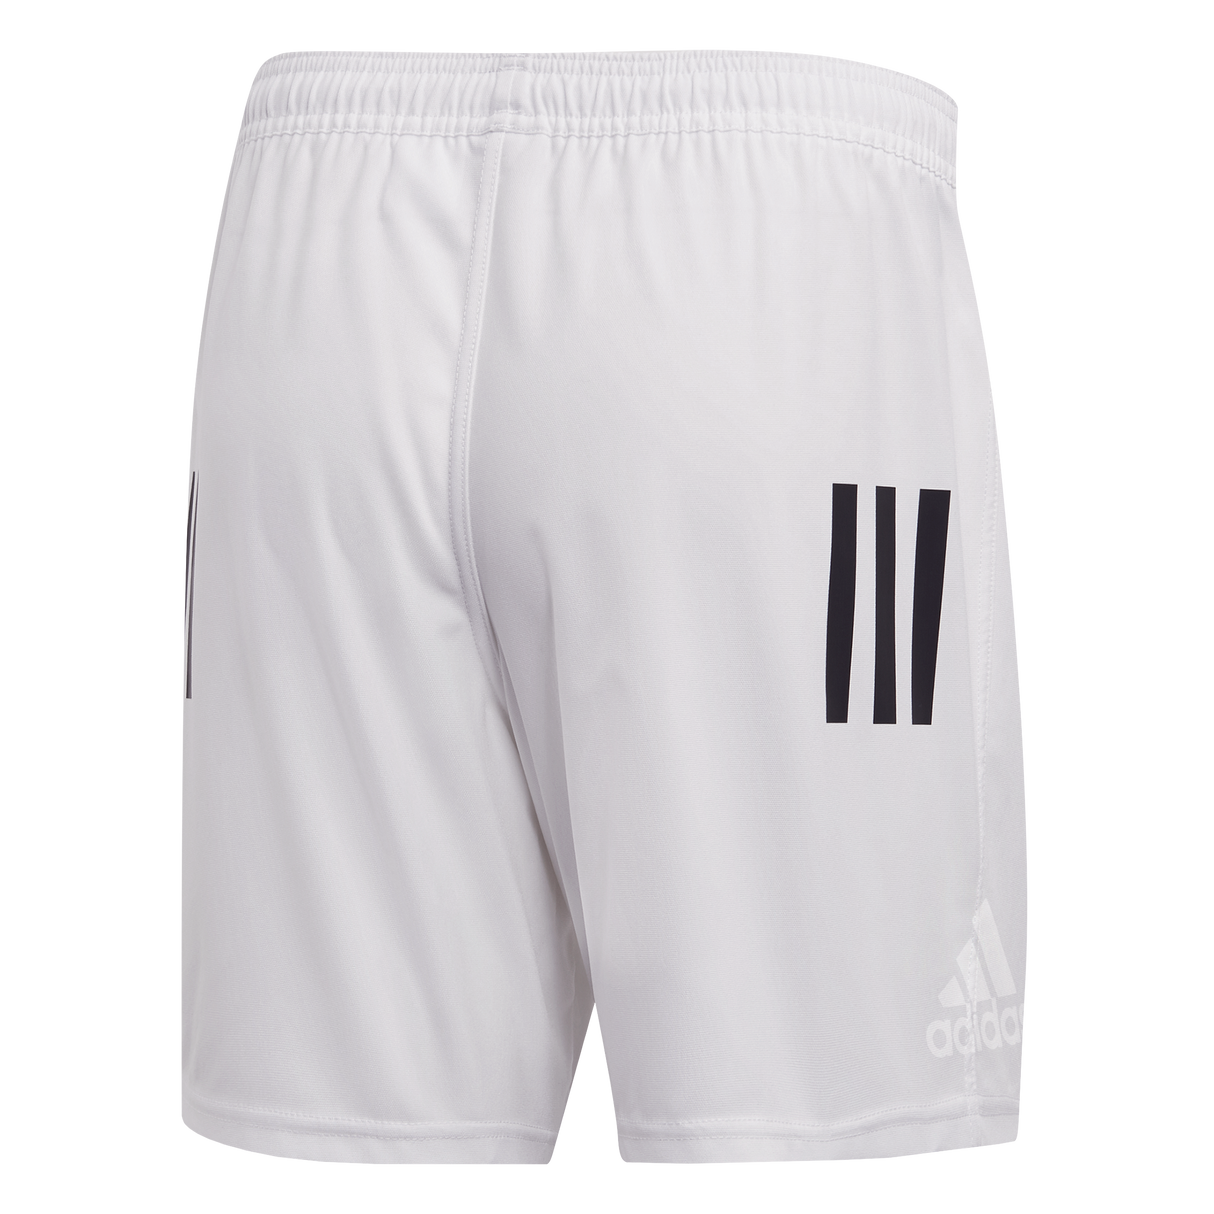 Adidas Rugby 3 Stripe Shorts - White